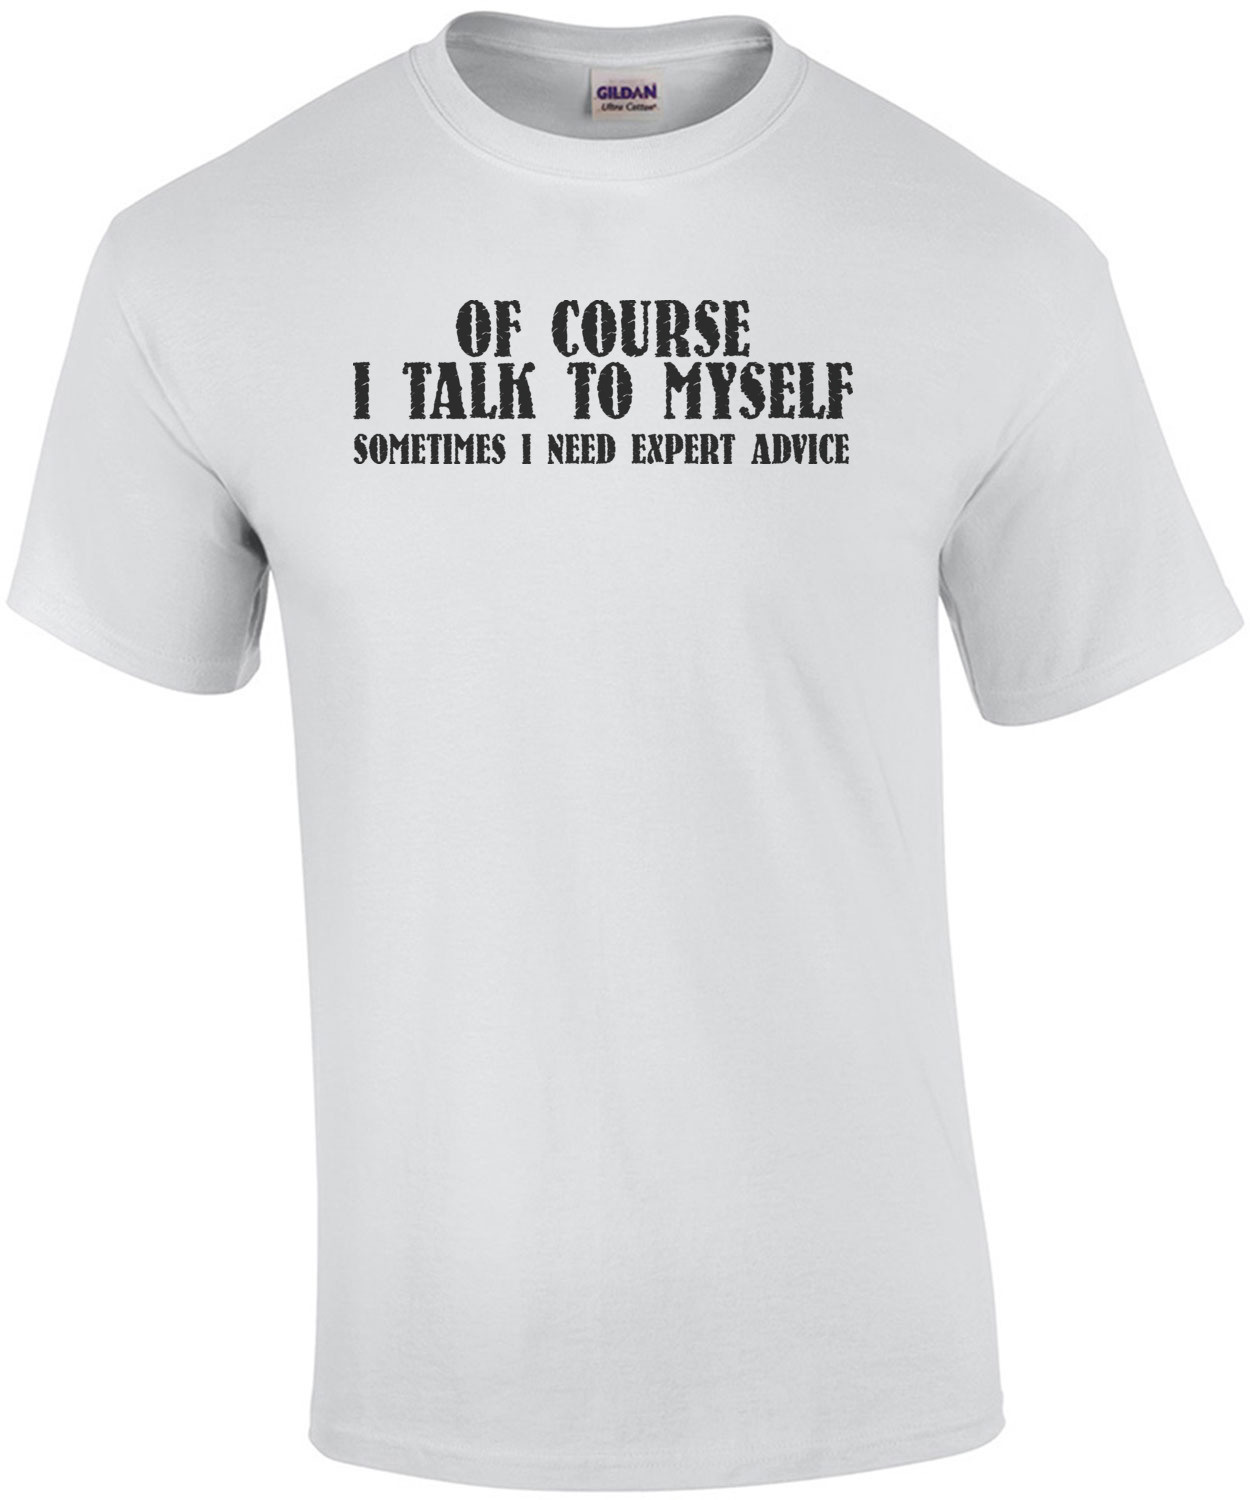 Of Course I Talk To Myself Sometimes I Need Expert Advice Kids Tee Shirt 2T-XL 